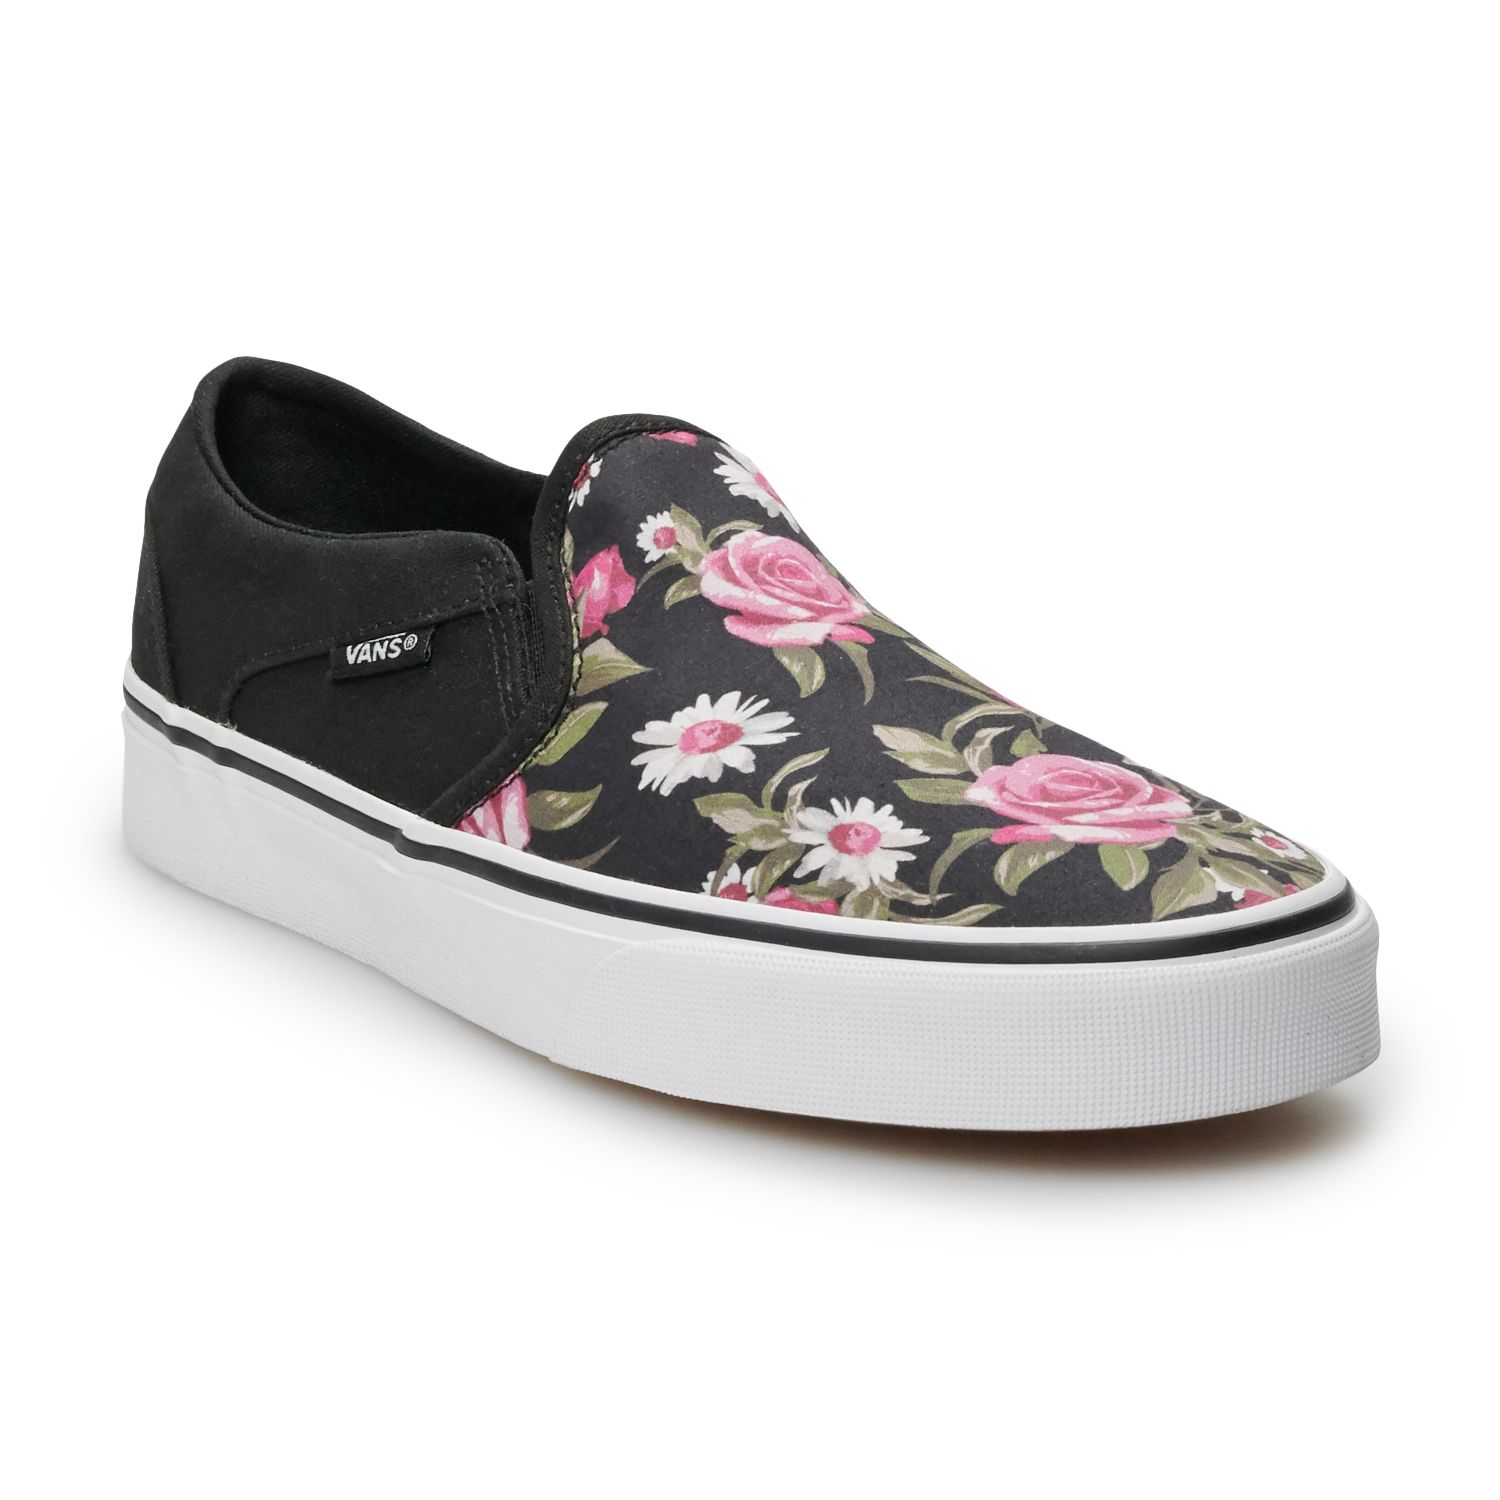 Vans® Asher Women's Floral Skate Shoes